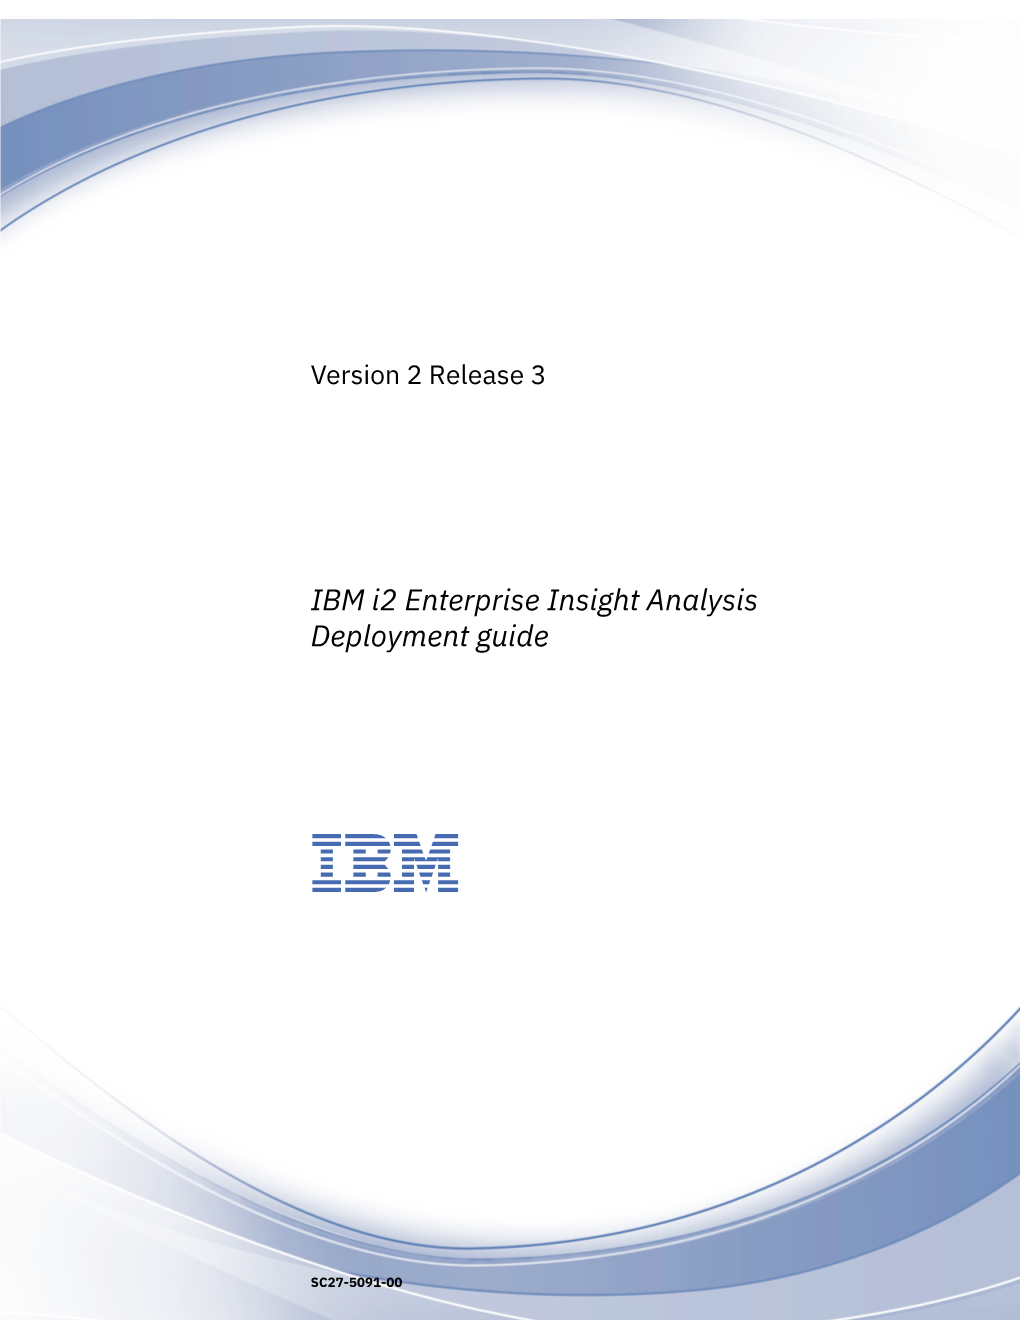 IBM I2 Enterprise Insight Analysis: Deployment Guide